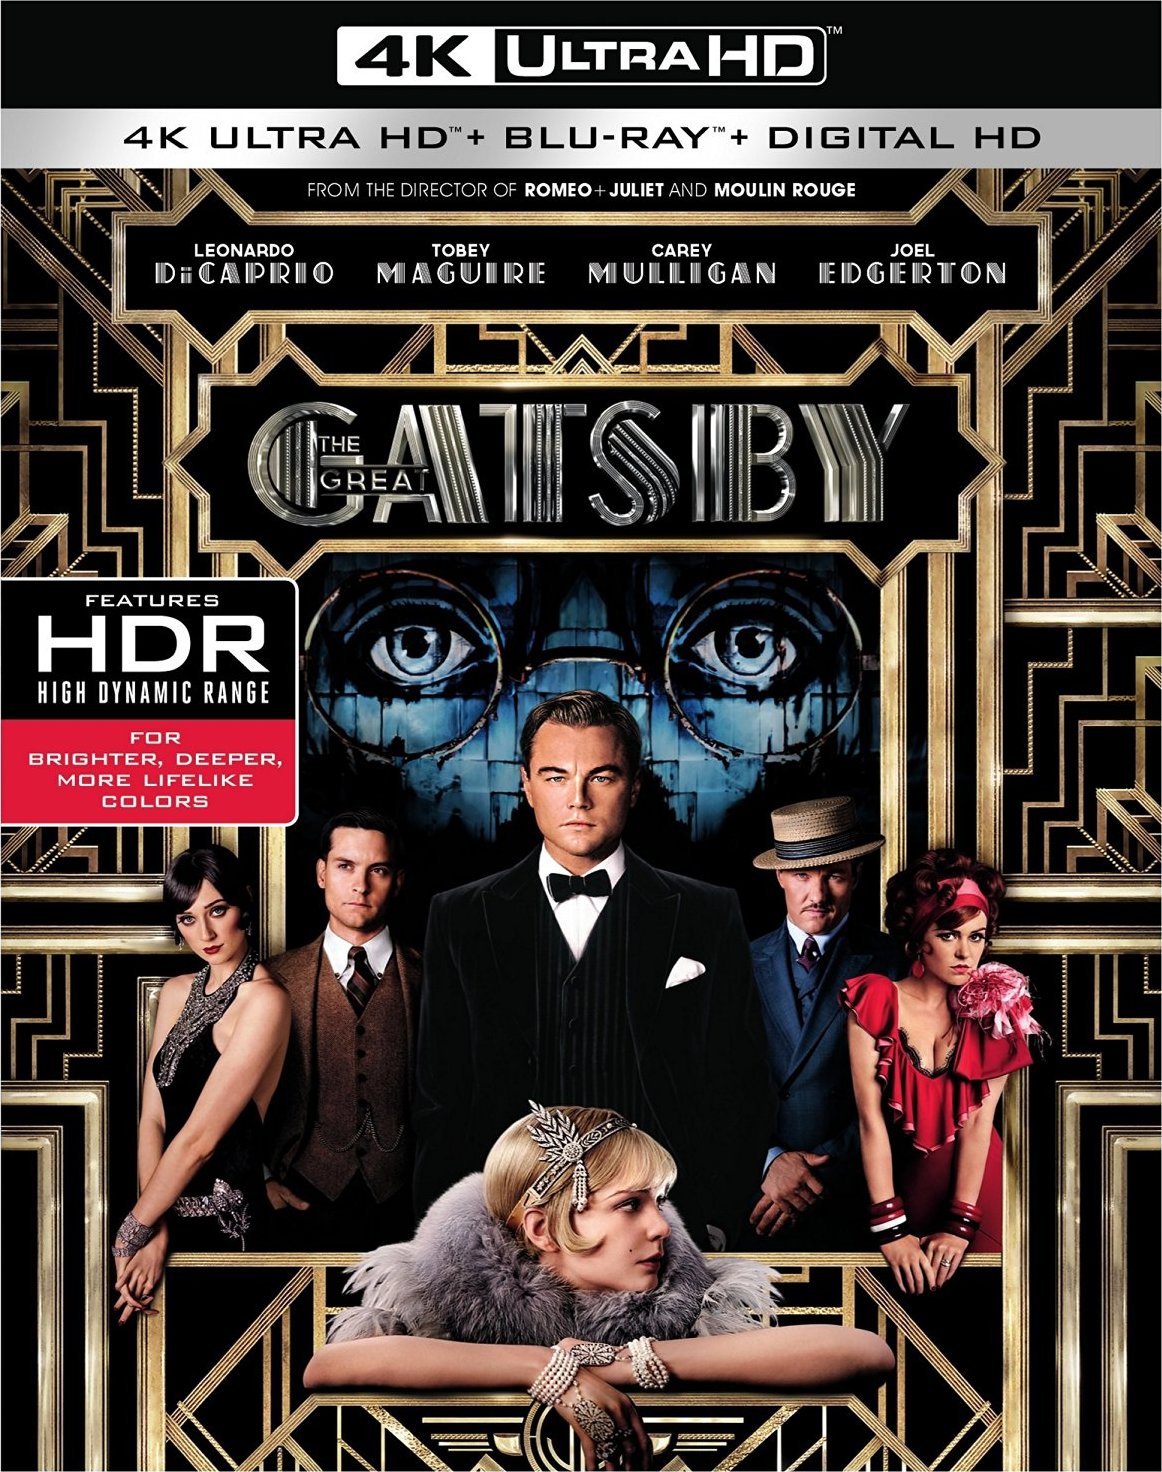 The Great Gatsby (4K Ultra HD) (Blu-ray), Baz Luhrmann